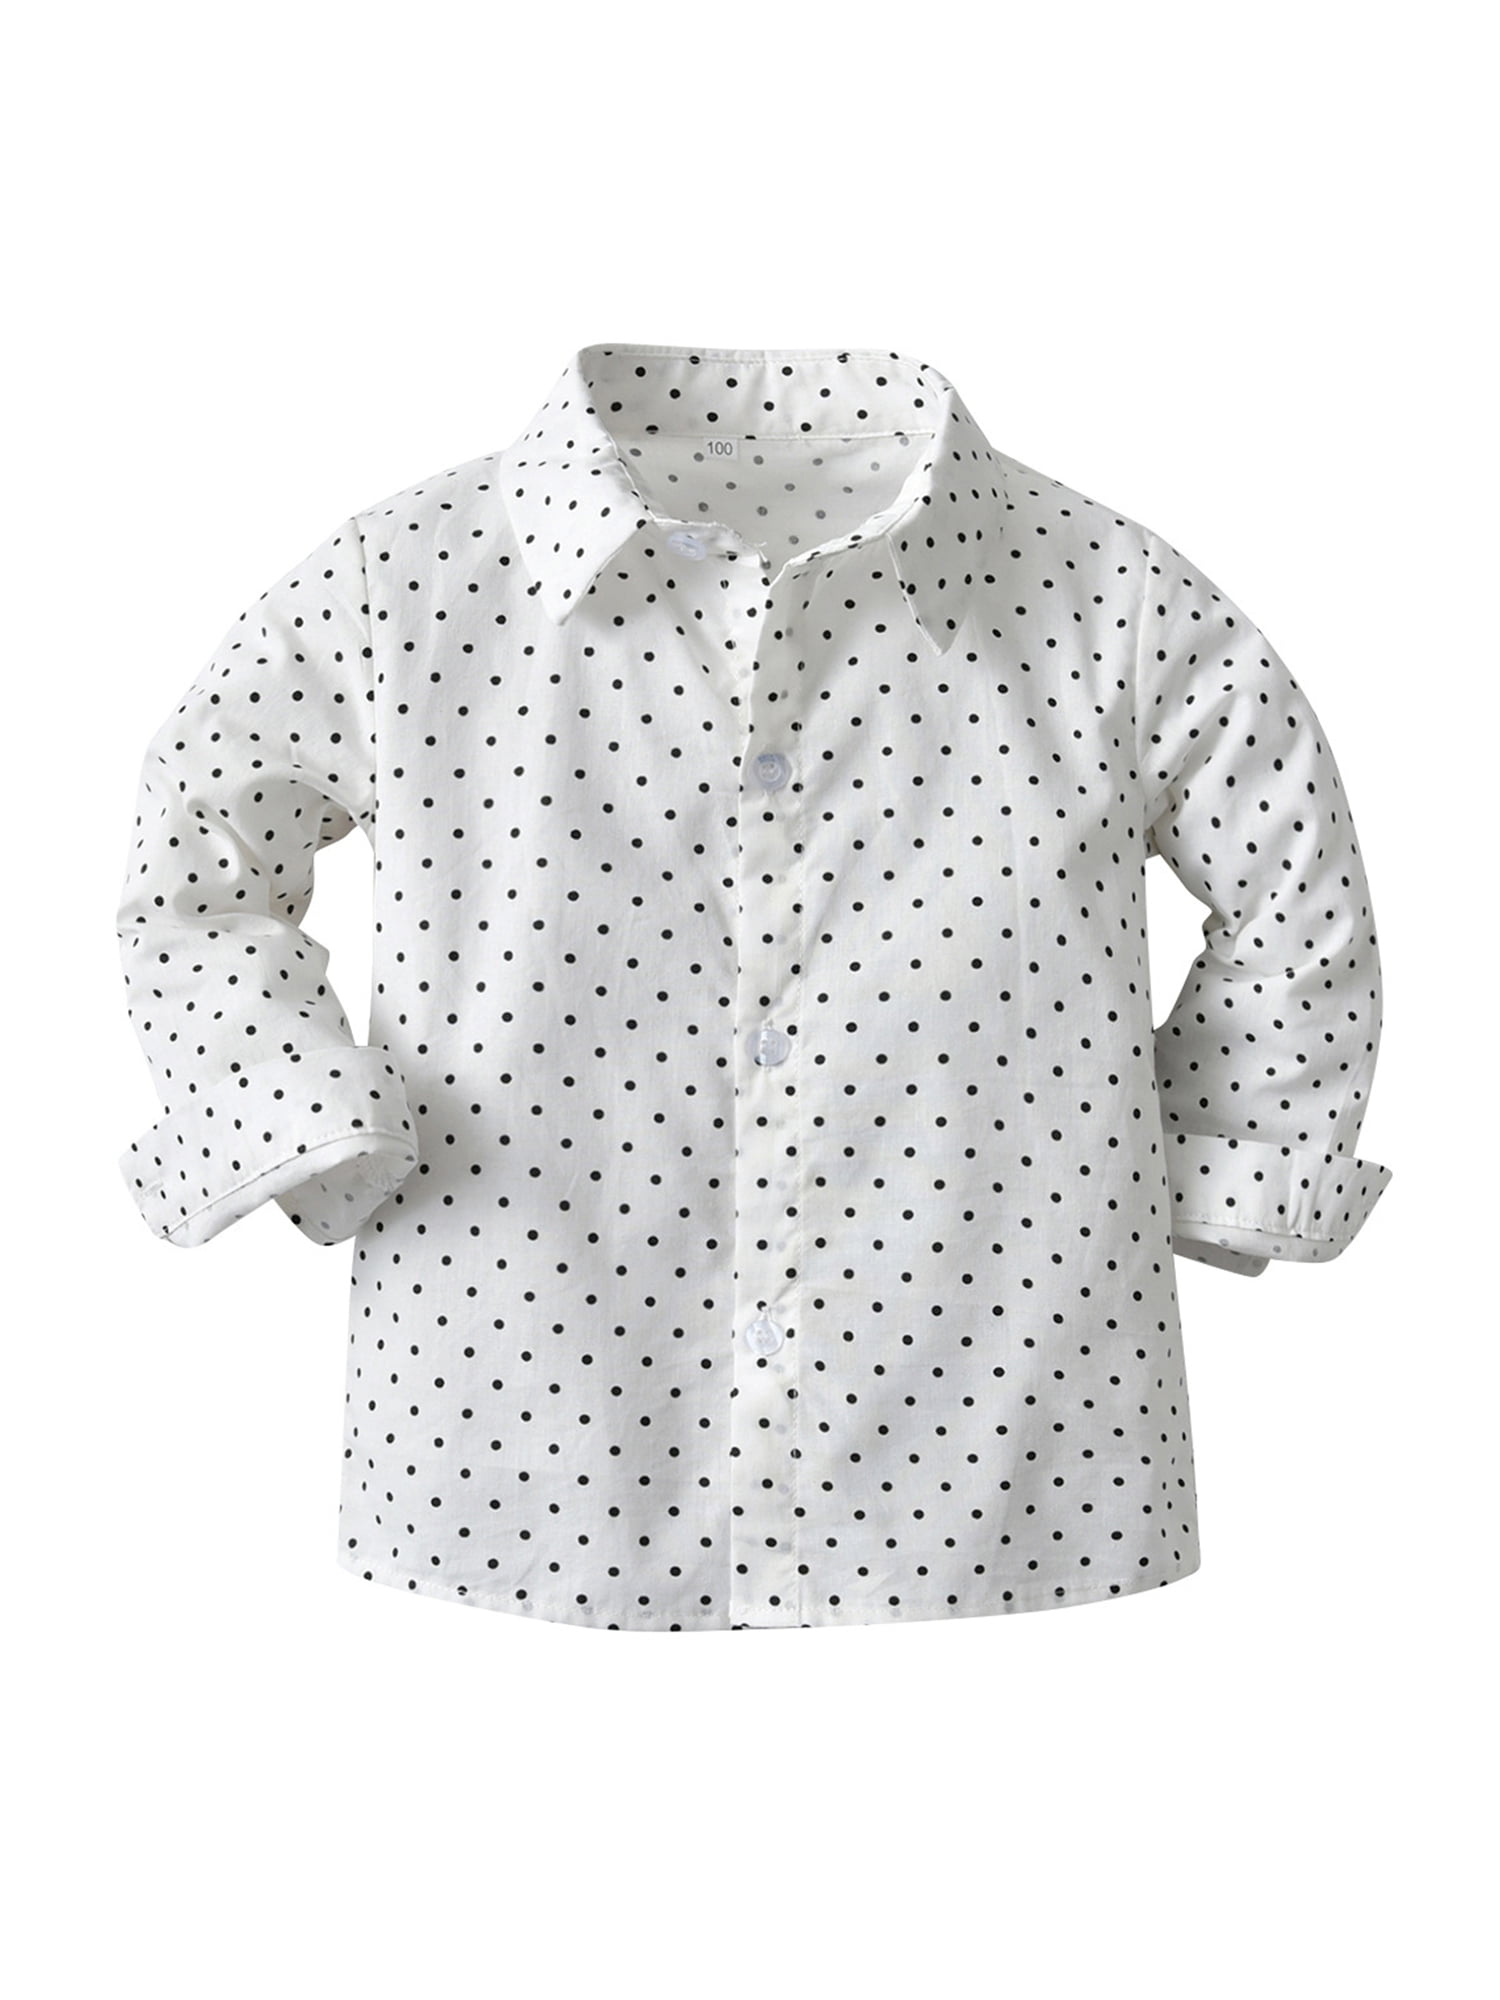 Gap Baby Boy Toddler Oxford Long Sleeve Shirt Top Stripe White Size 18-24 Months 